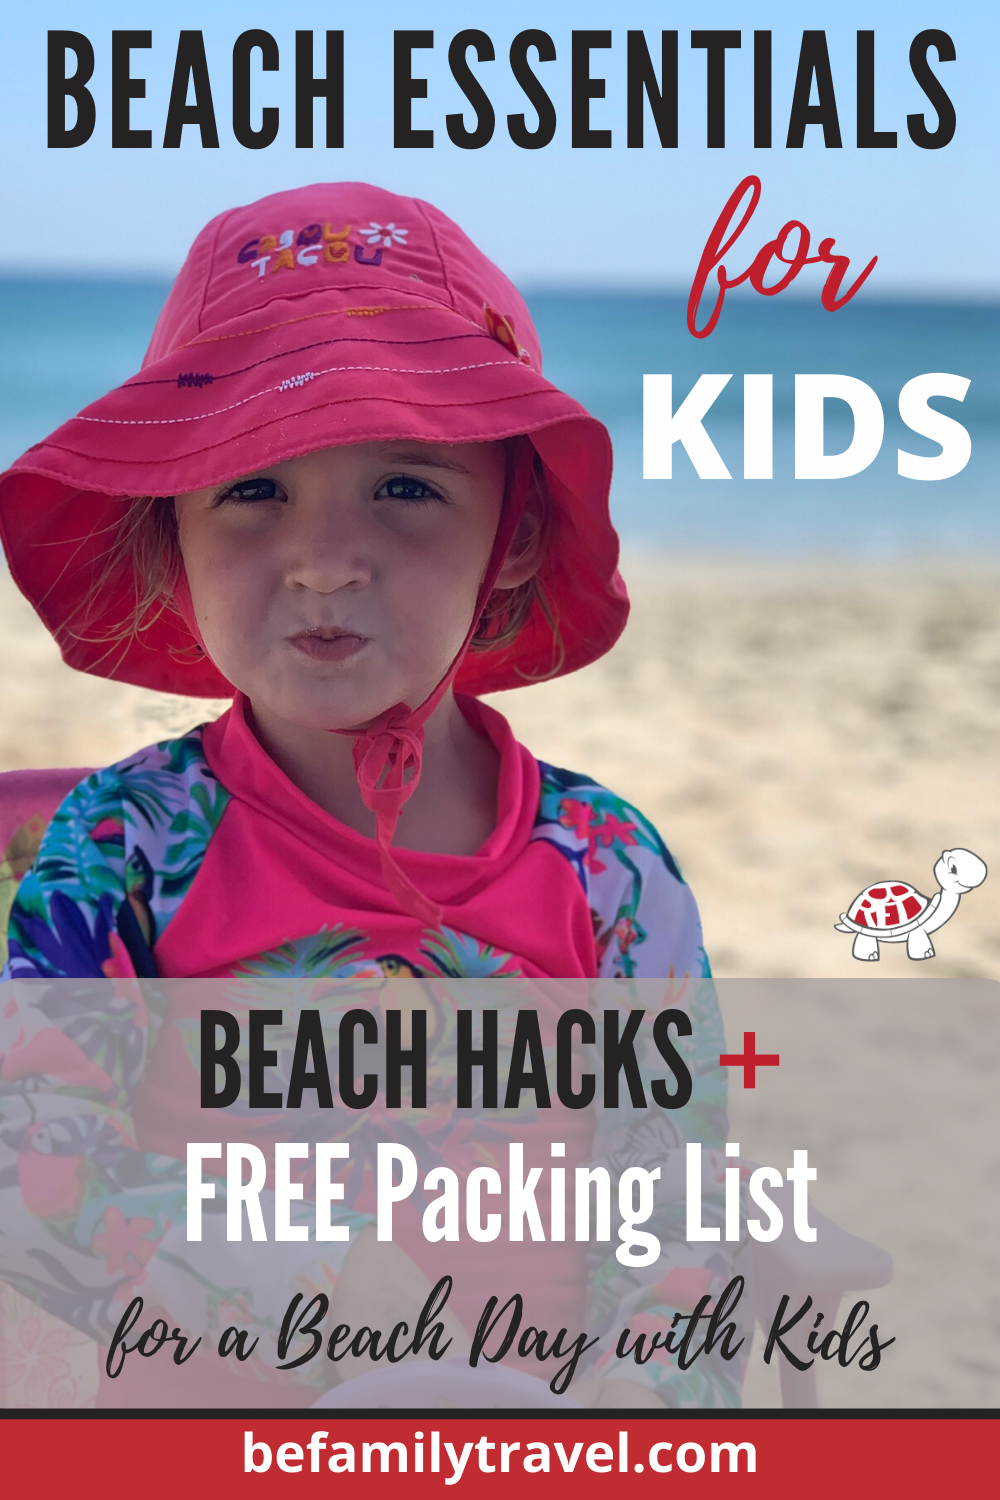 Beach Essentials: What To Bring For Kids - BeFamilyTravel